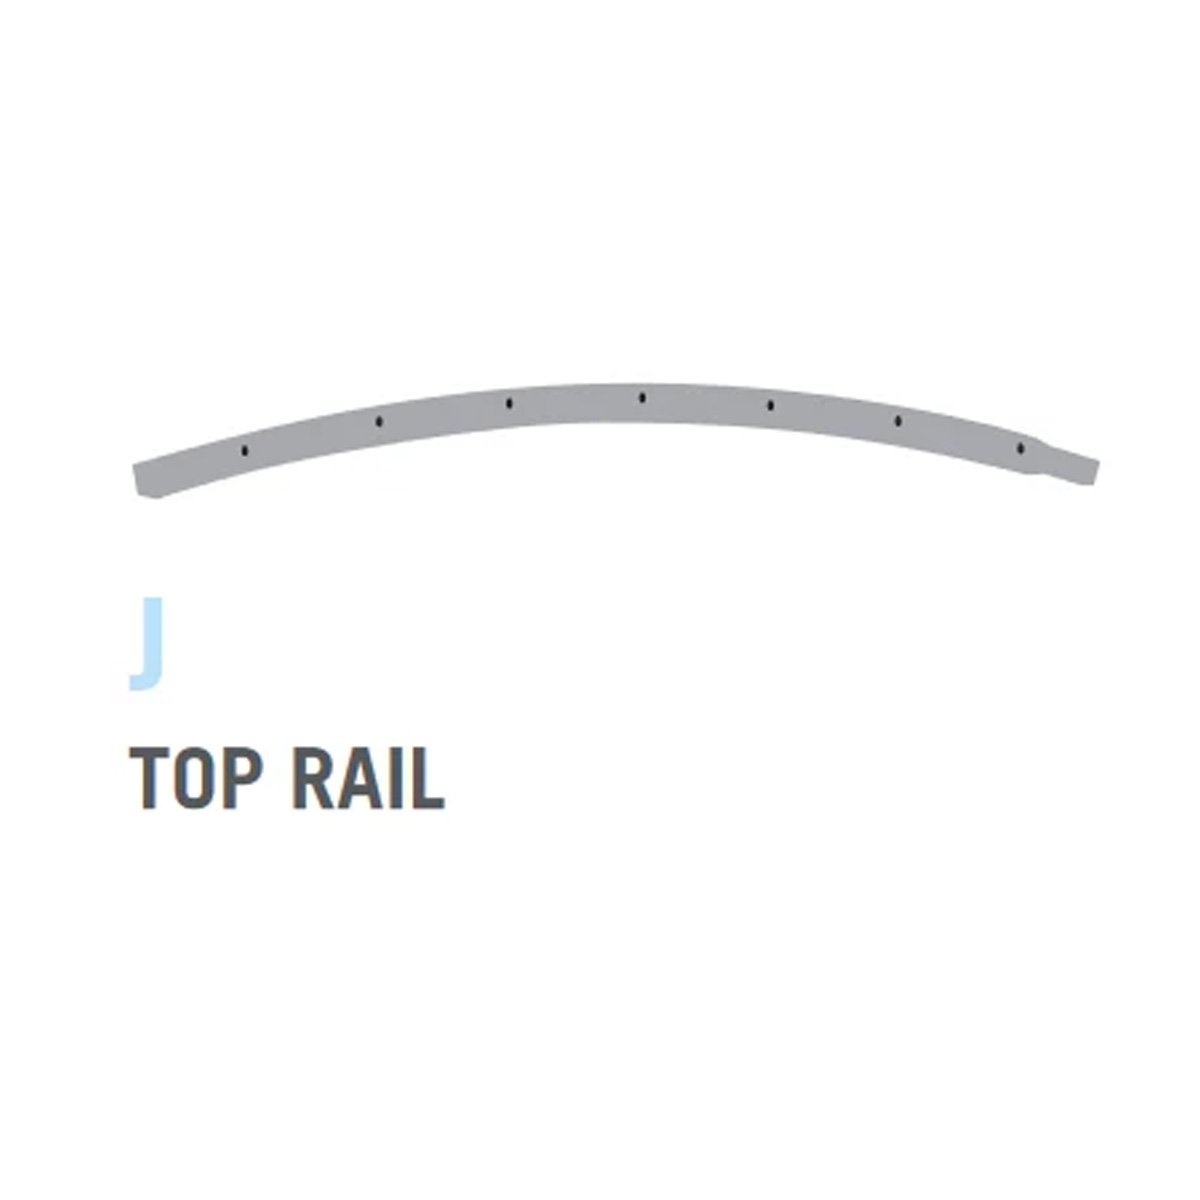 Top Rail for 14 foot Cirrus Trampoline (Part J).